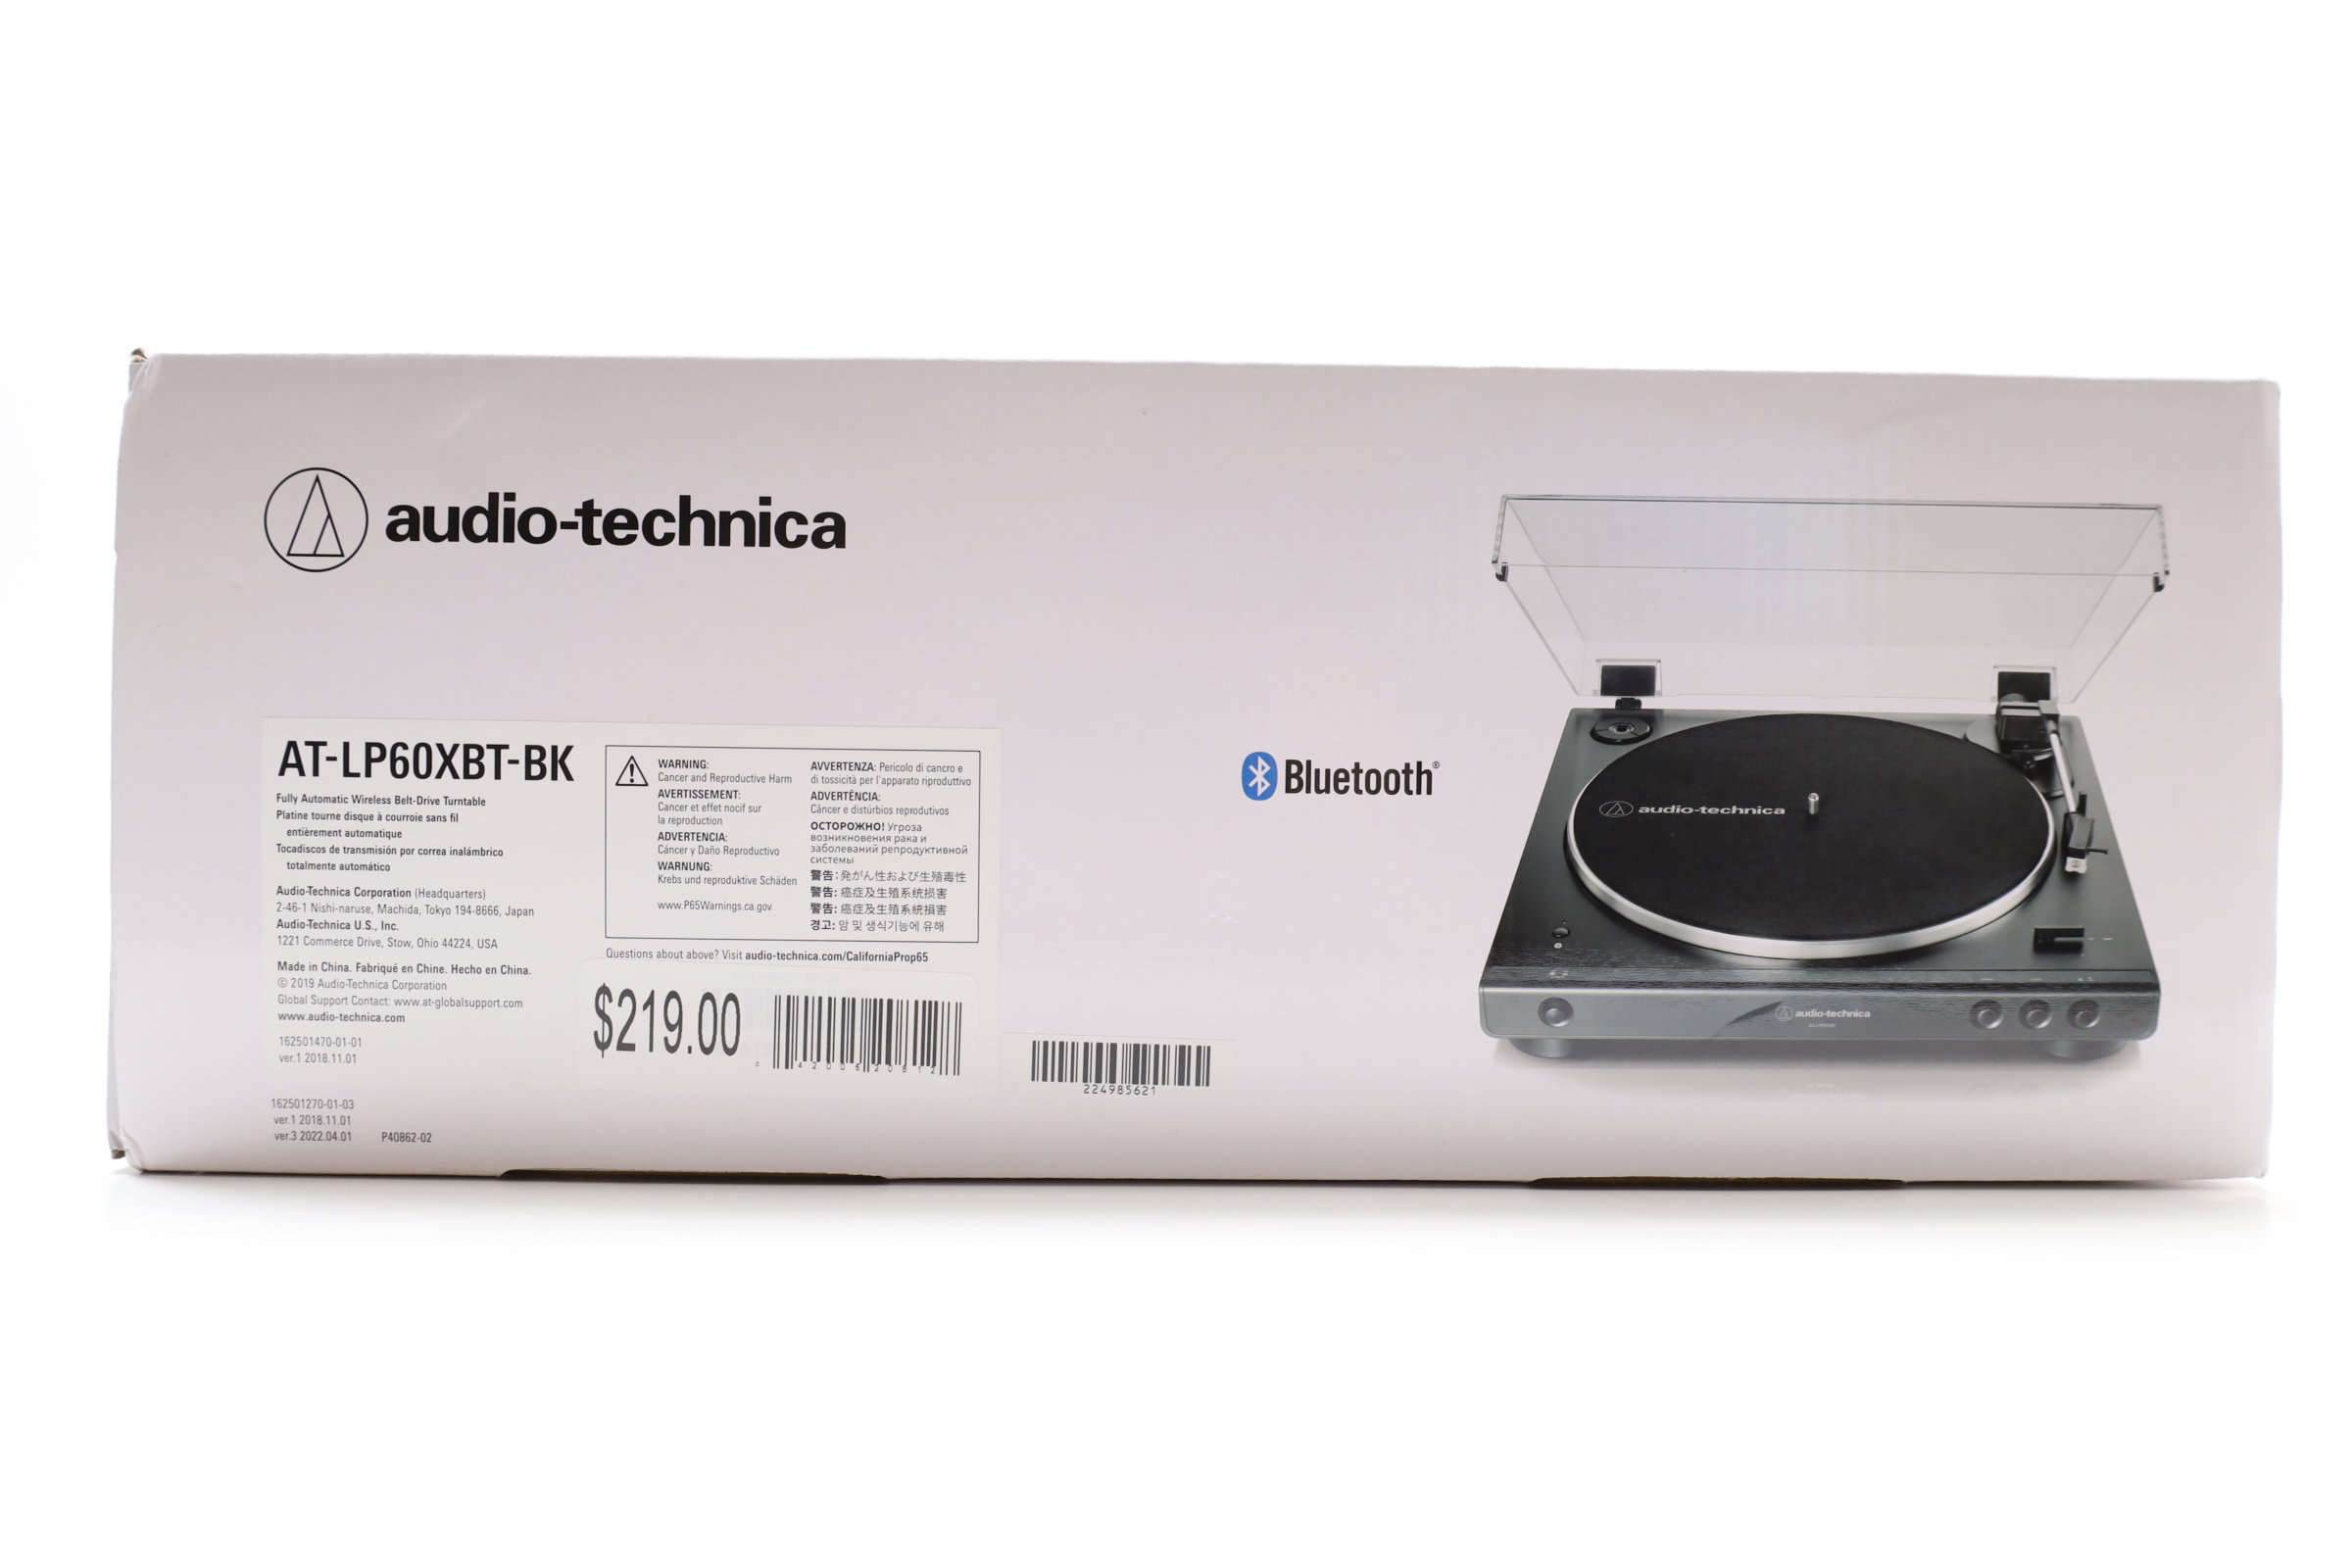 Audio-Technica AT-LP60XBT Bluetooth Belt Drive Turntable